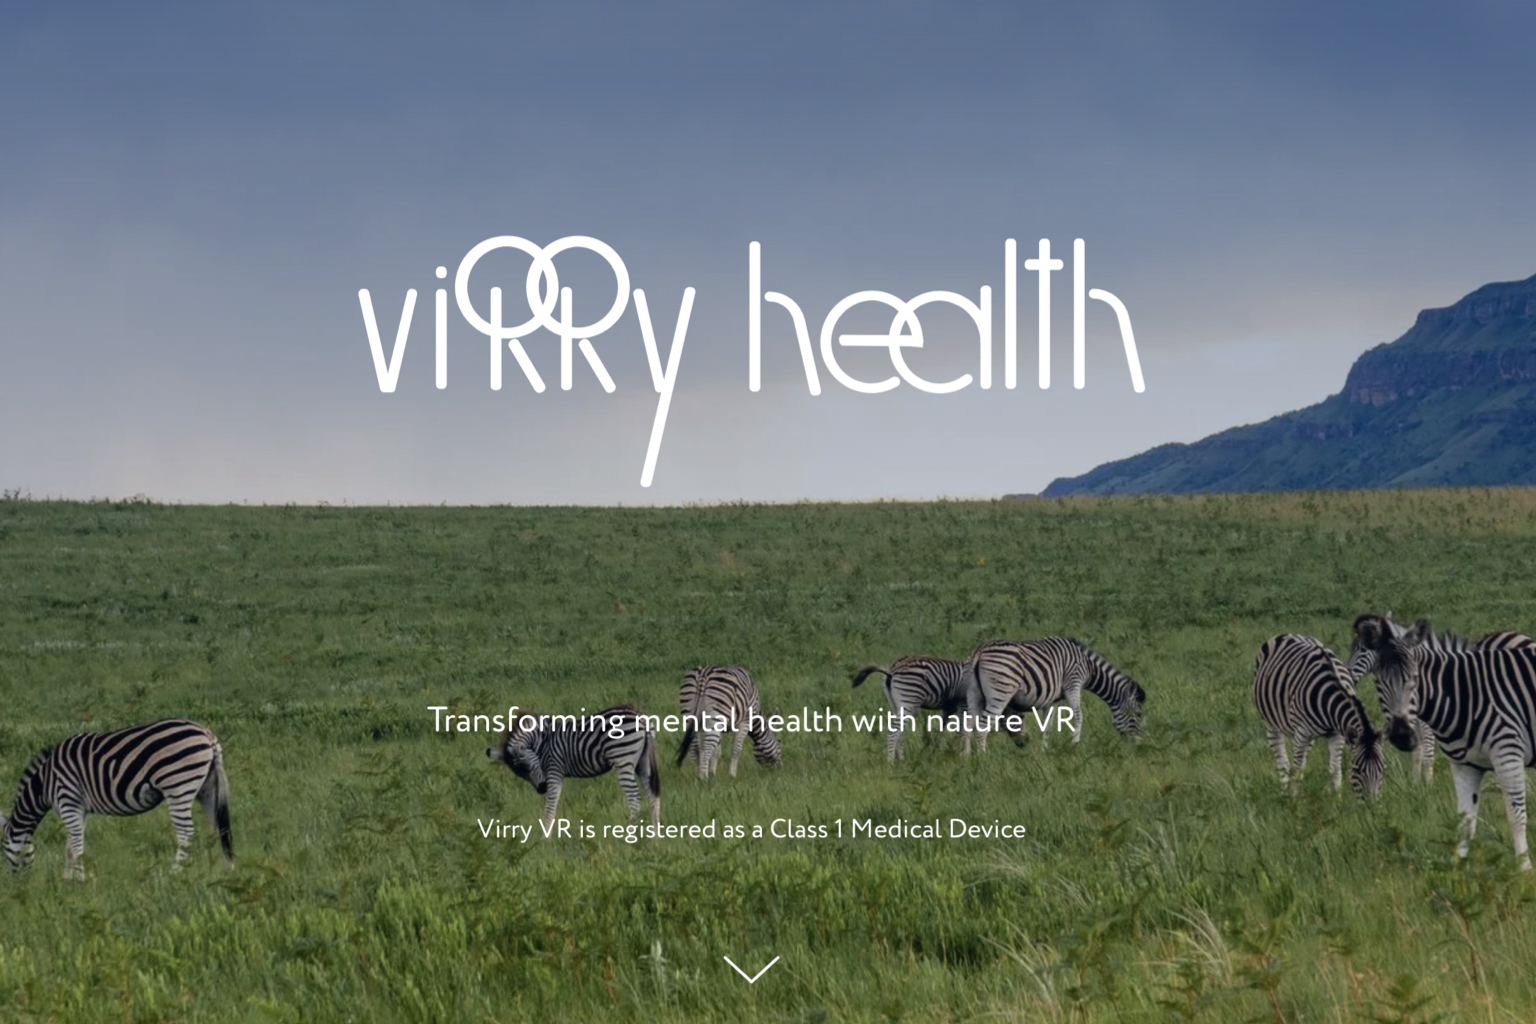 virry health